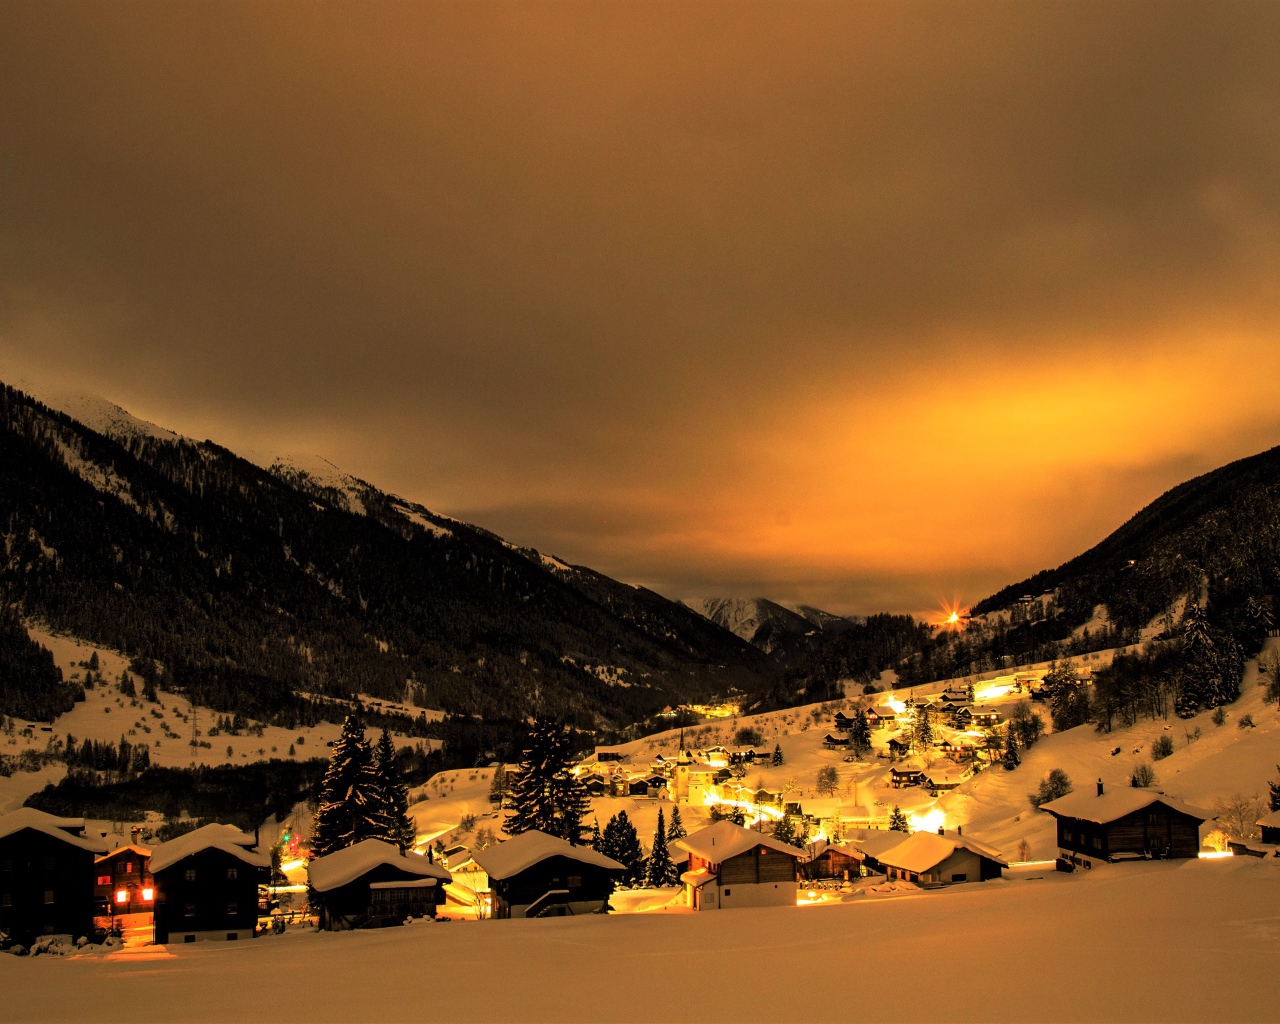 Winter night in a mountainous city, Switzerland